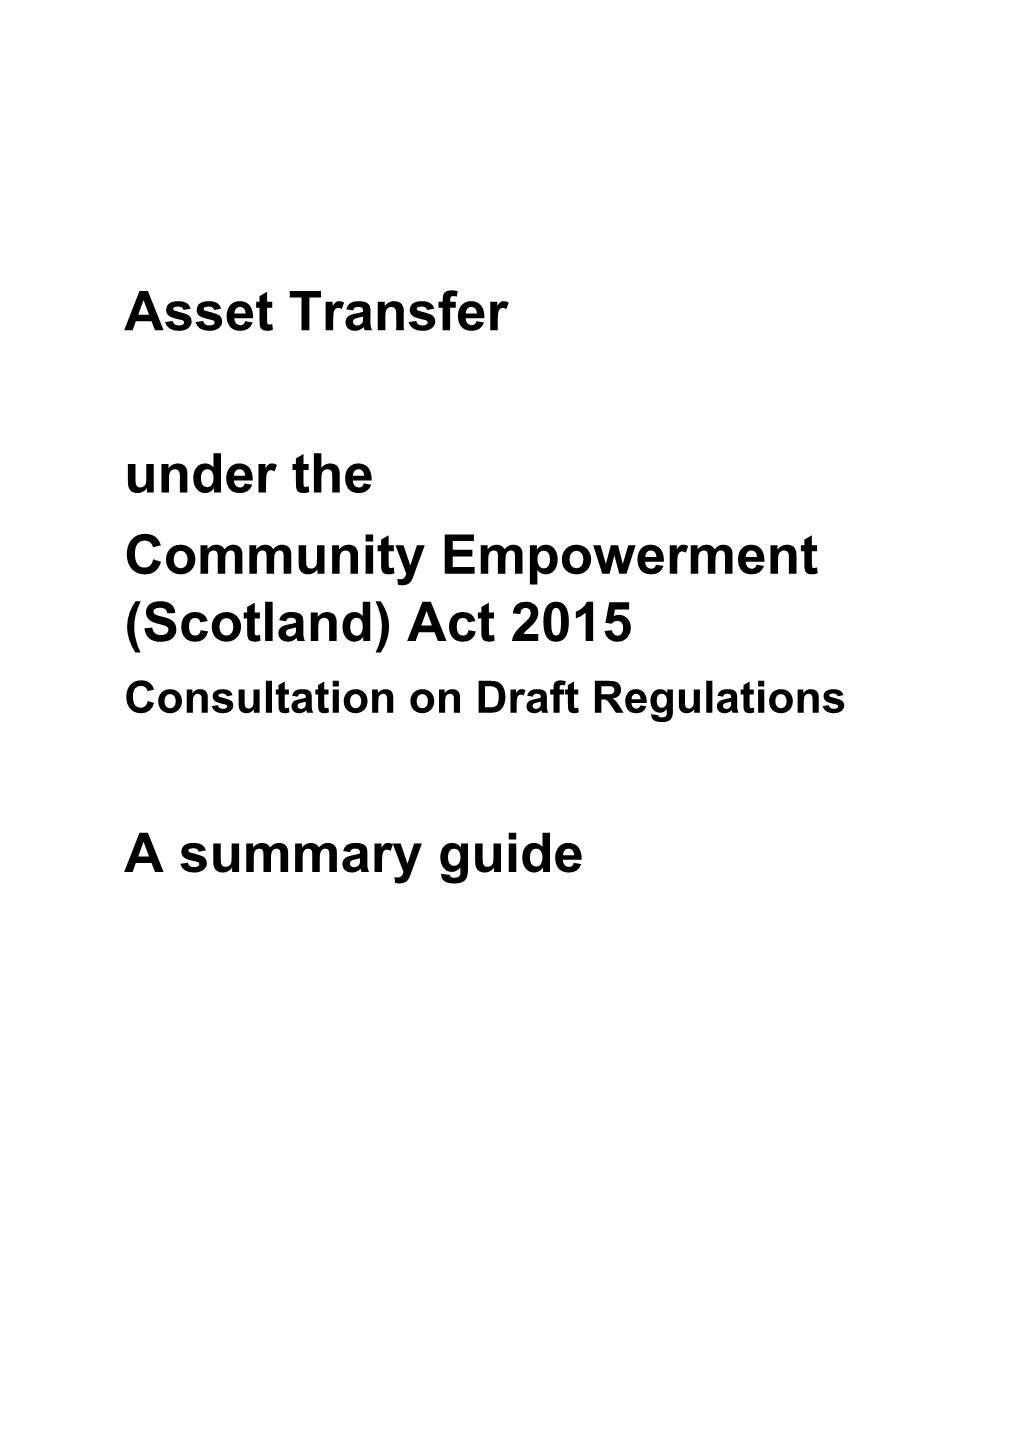 Community Empowerment (Scotland) Act 2015